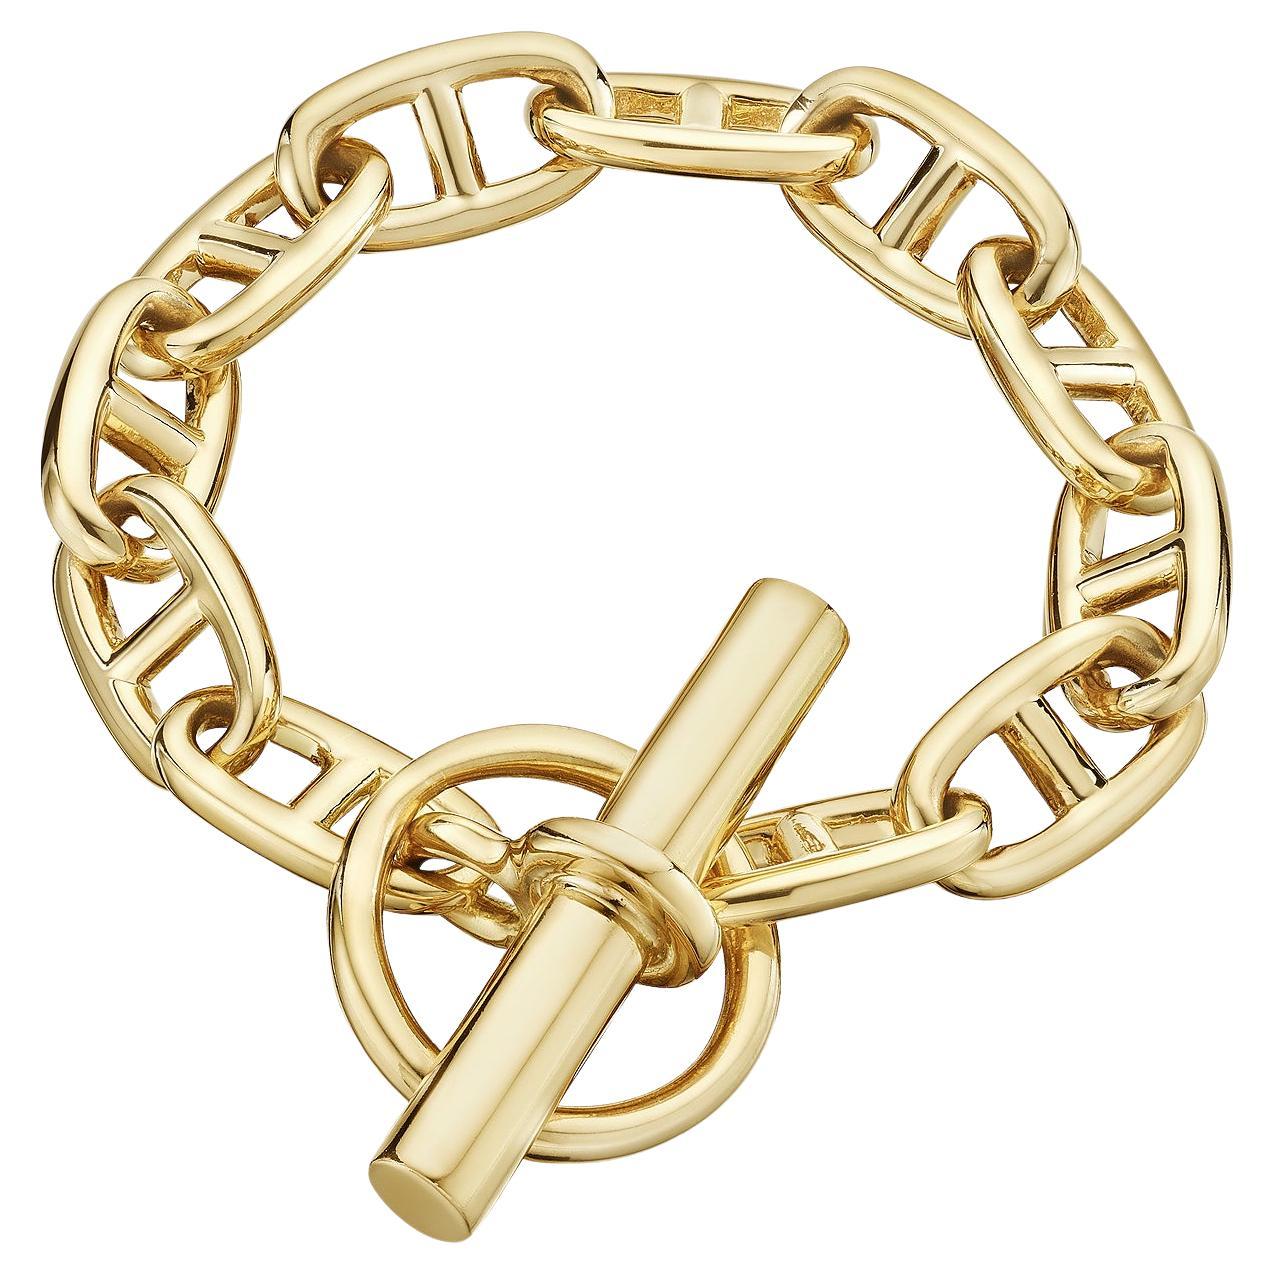 Bracelet mini cadenas sur cordon or jaune – Charlyze Paris